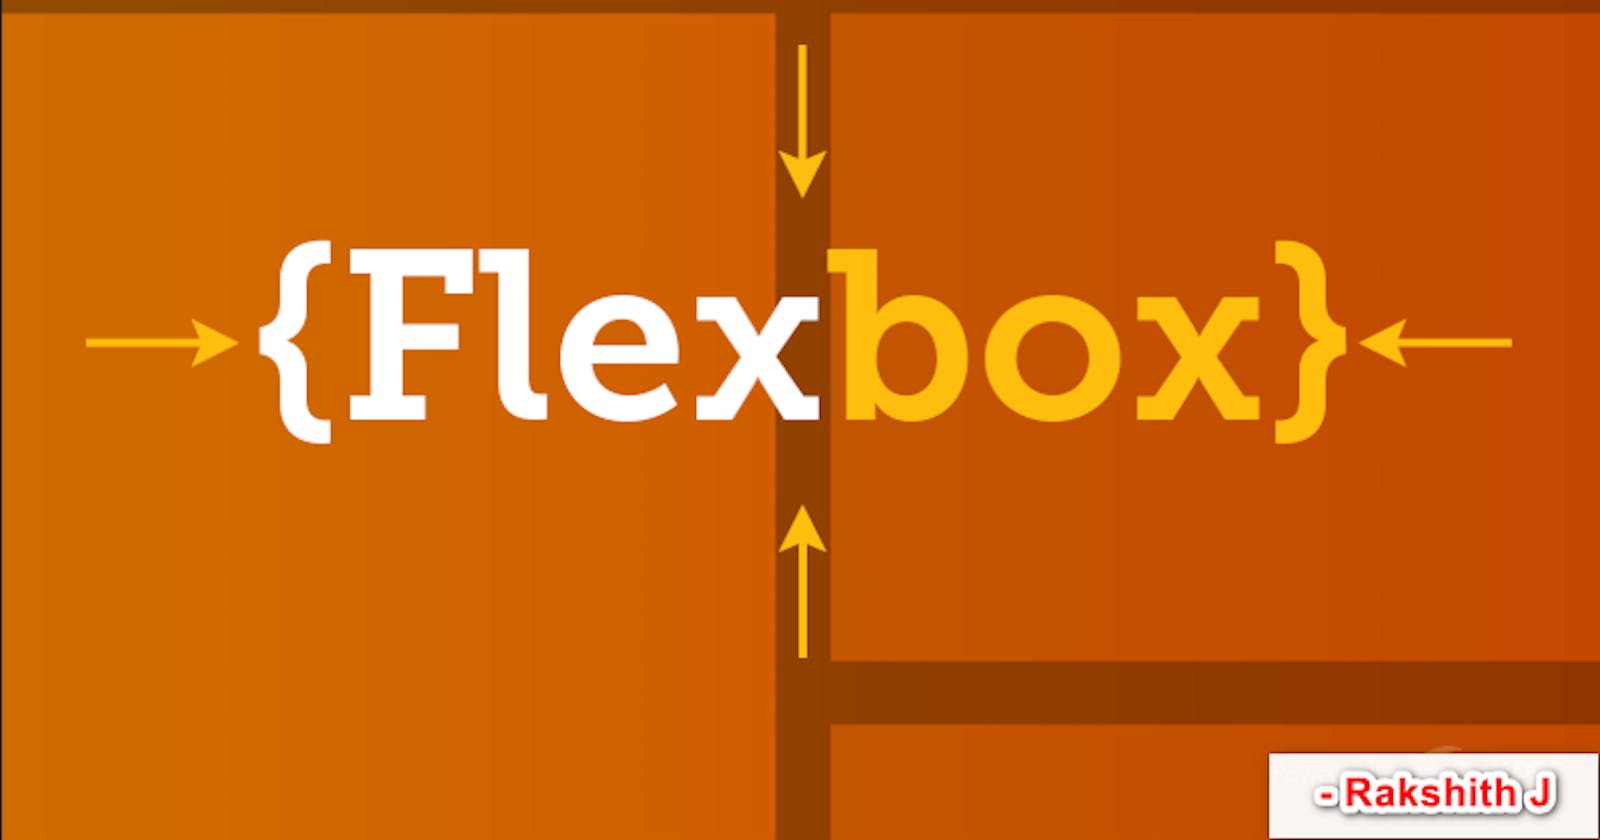 Cheat sheet for Flexbox